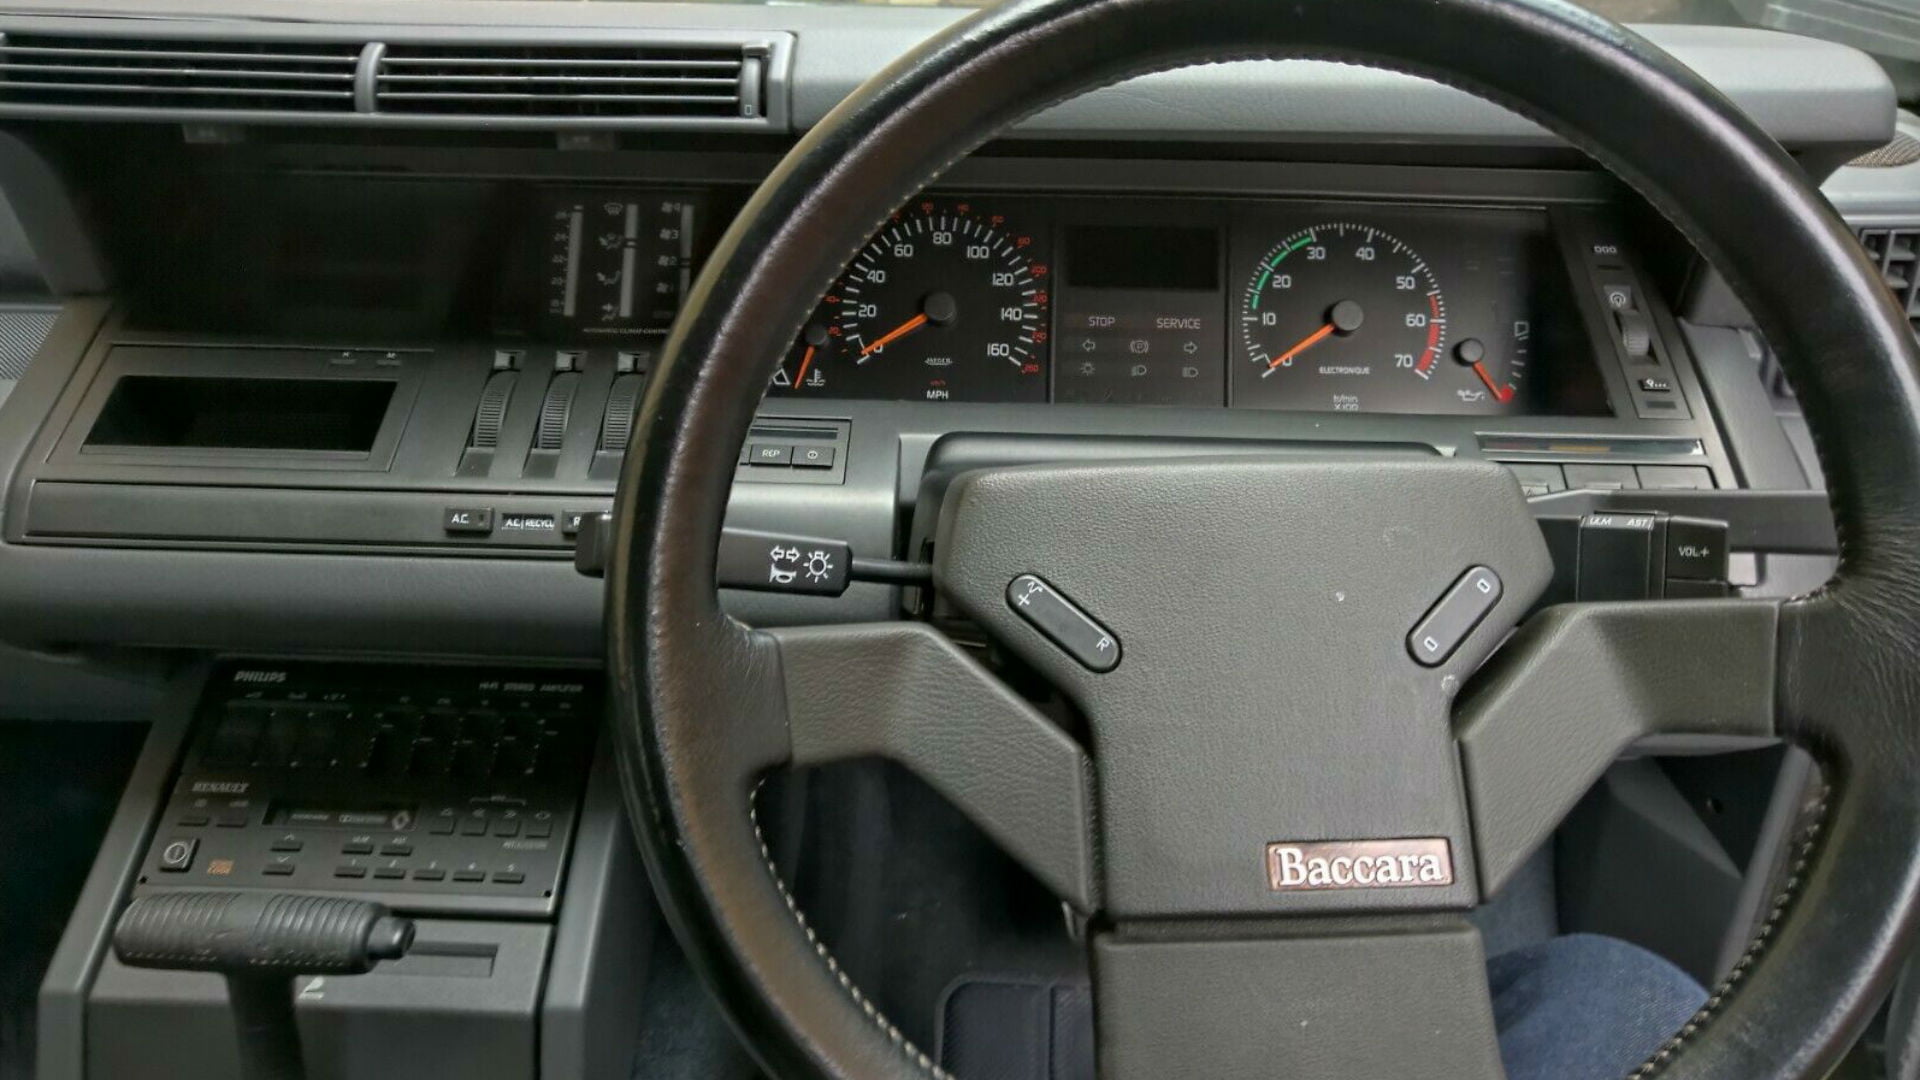 Renault 25 Baccara dashboard